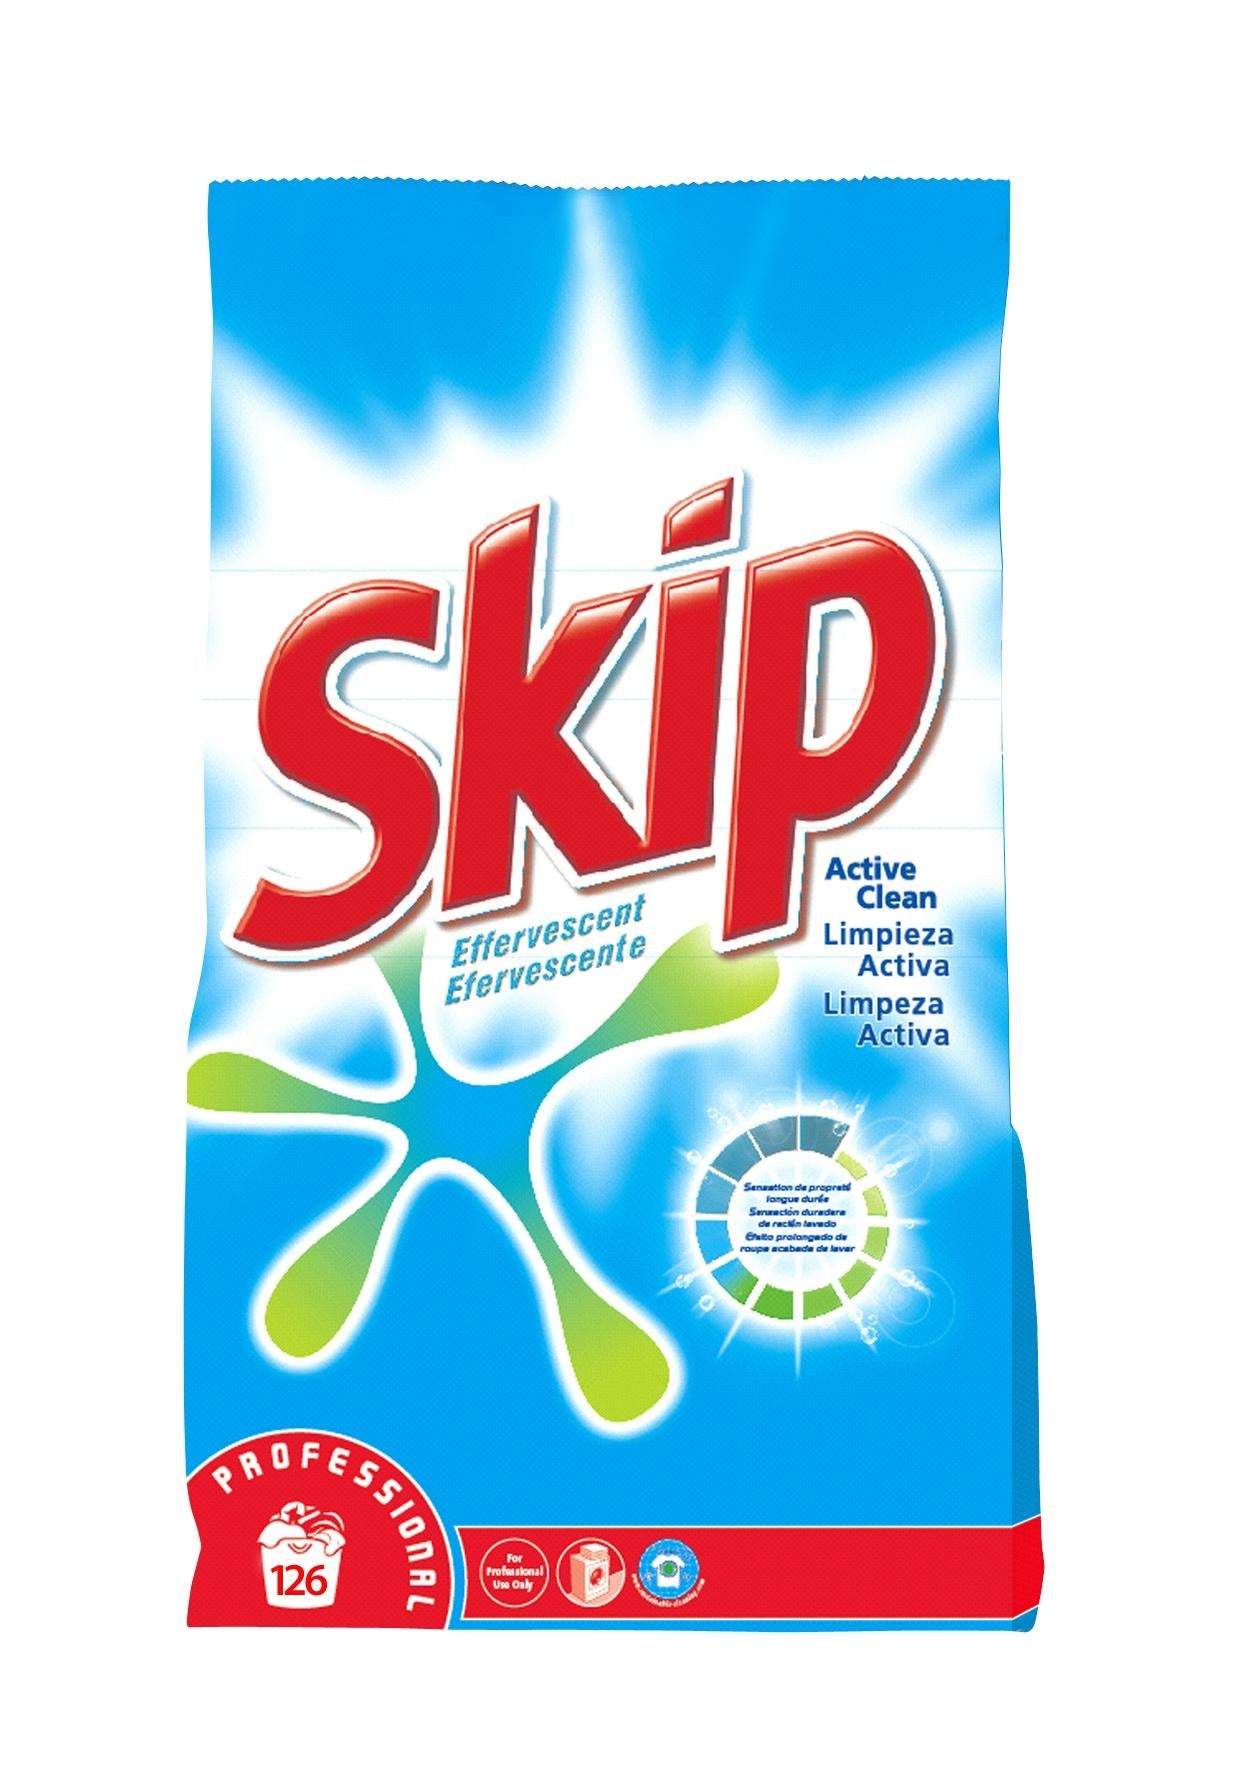 DETERGENTE SKIP   KG – prisma-soluciones-de-limpieza